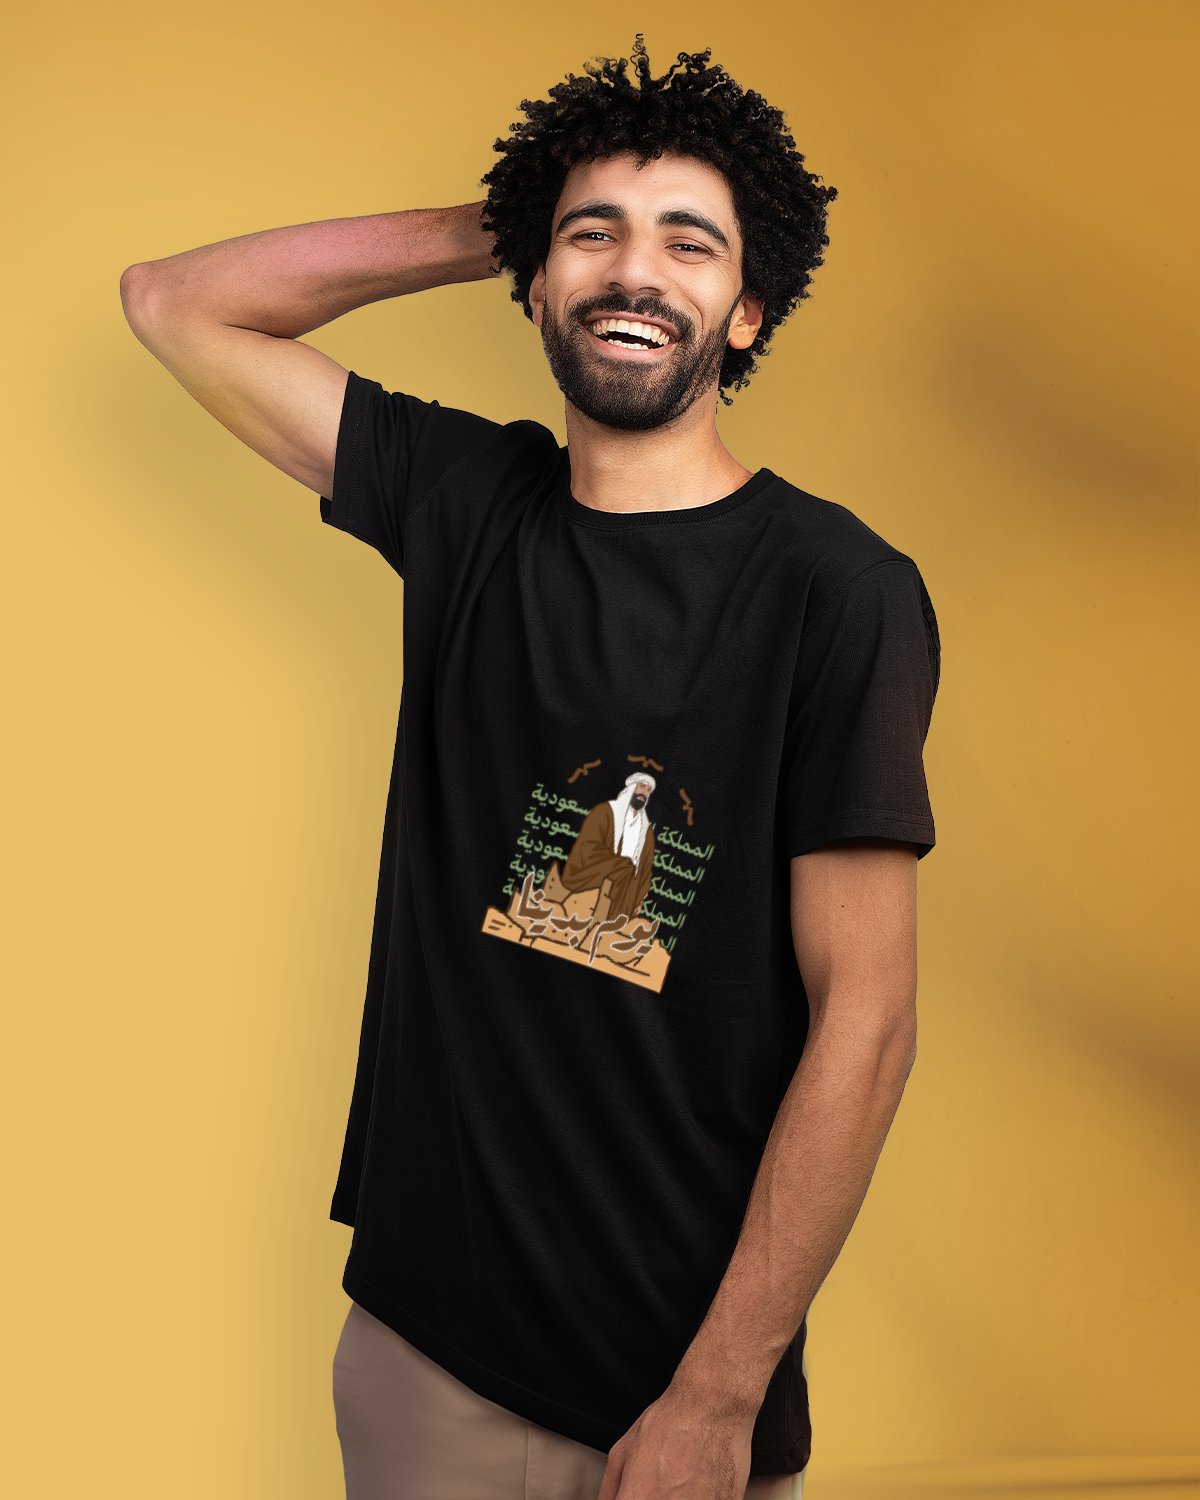 Men's Foundation Day T-shirt (Yawm Badina)